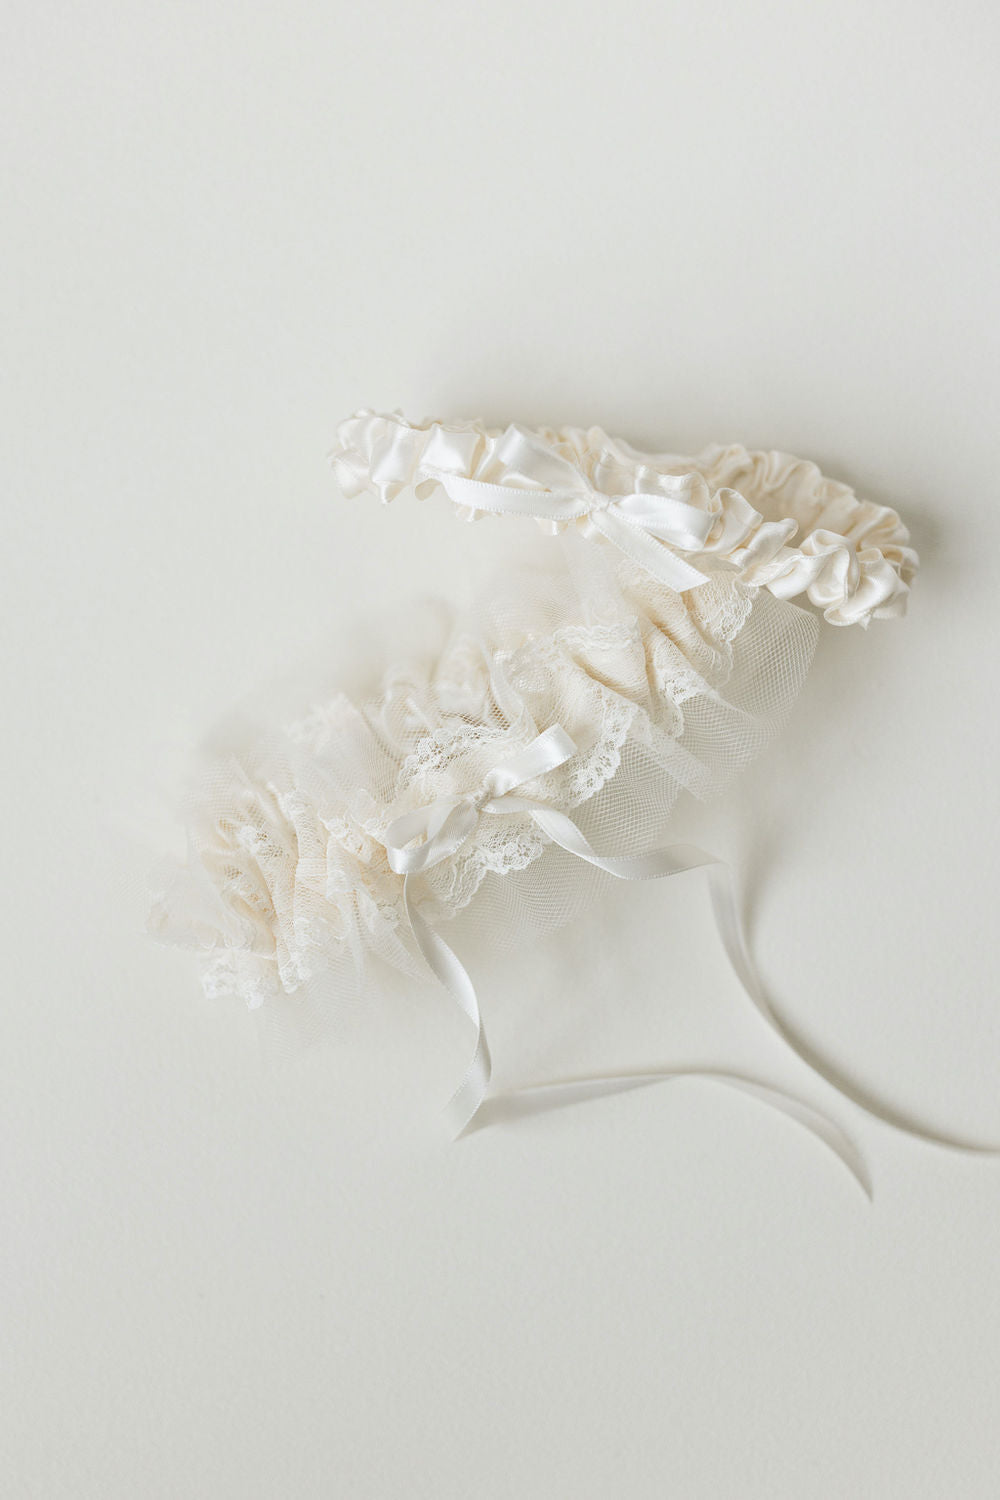 tulle and lace wedding garter set handmade wedding heirloom by The Garter Girl